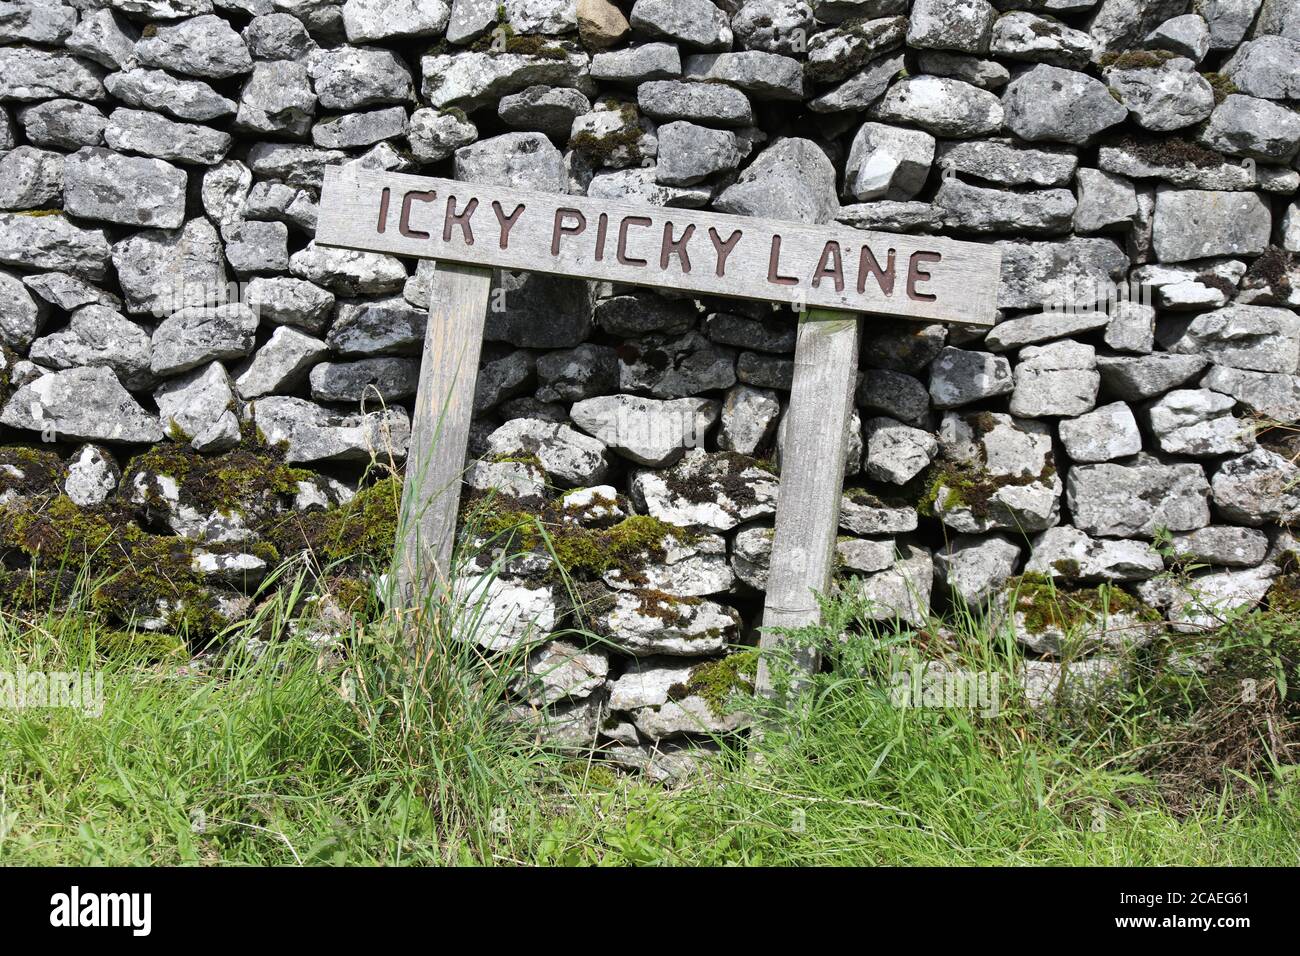 Icky Picky Lane in the Derbyshire lead mining village of Monyash Stock Photo